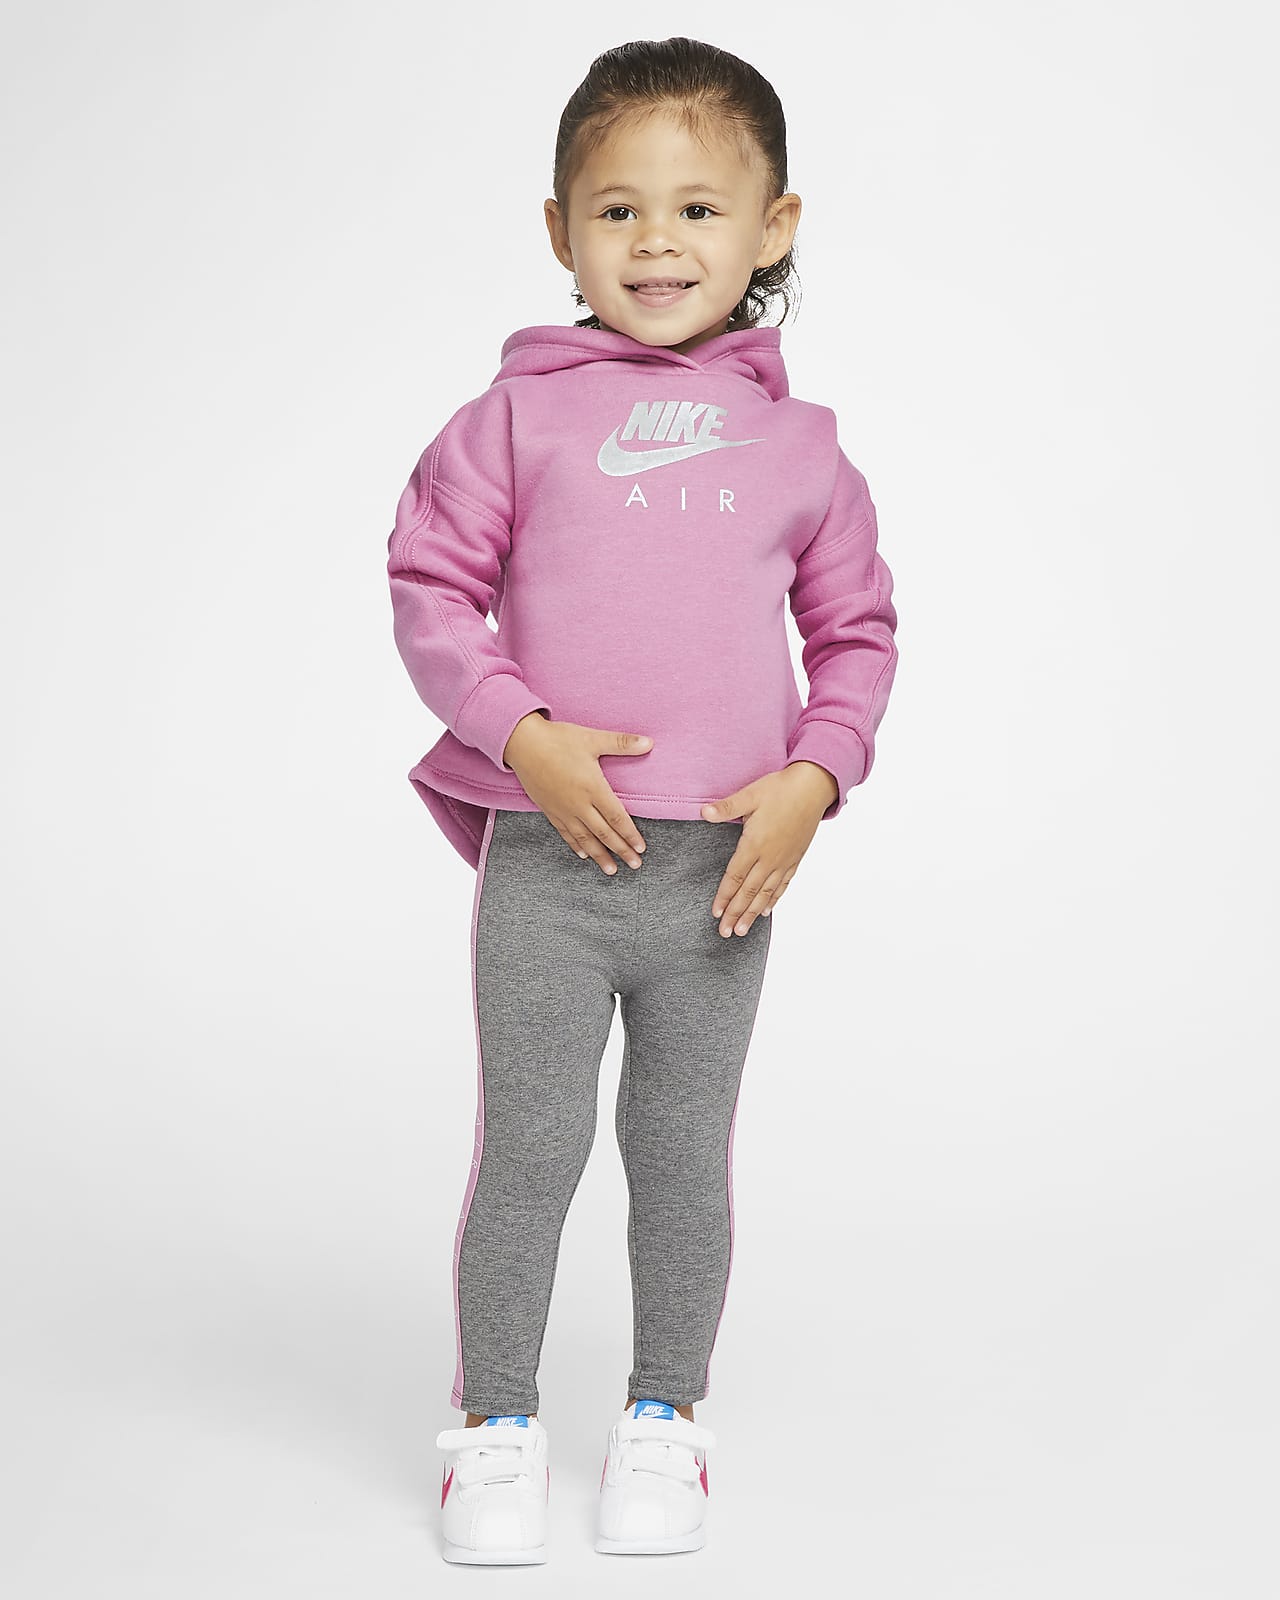 Nike, Air Leggings Set Infant Girls, Rush Pink